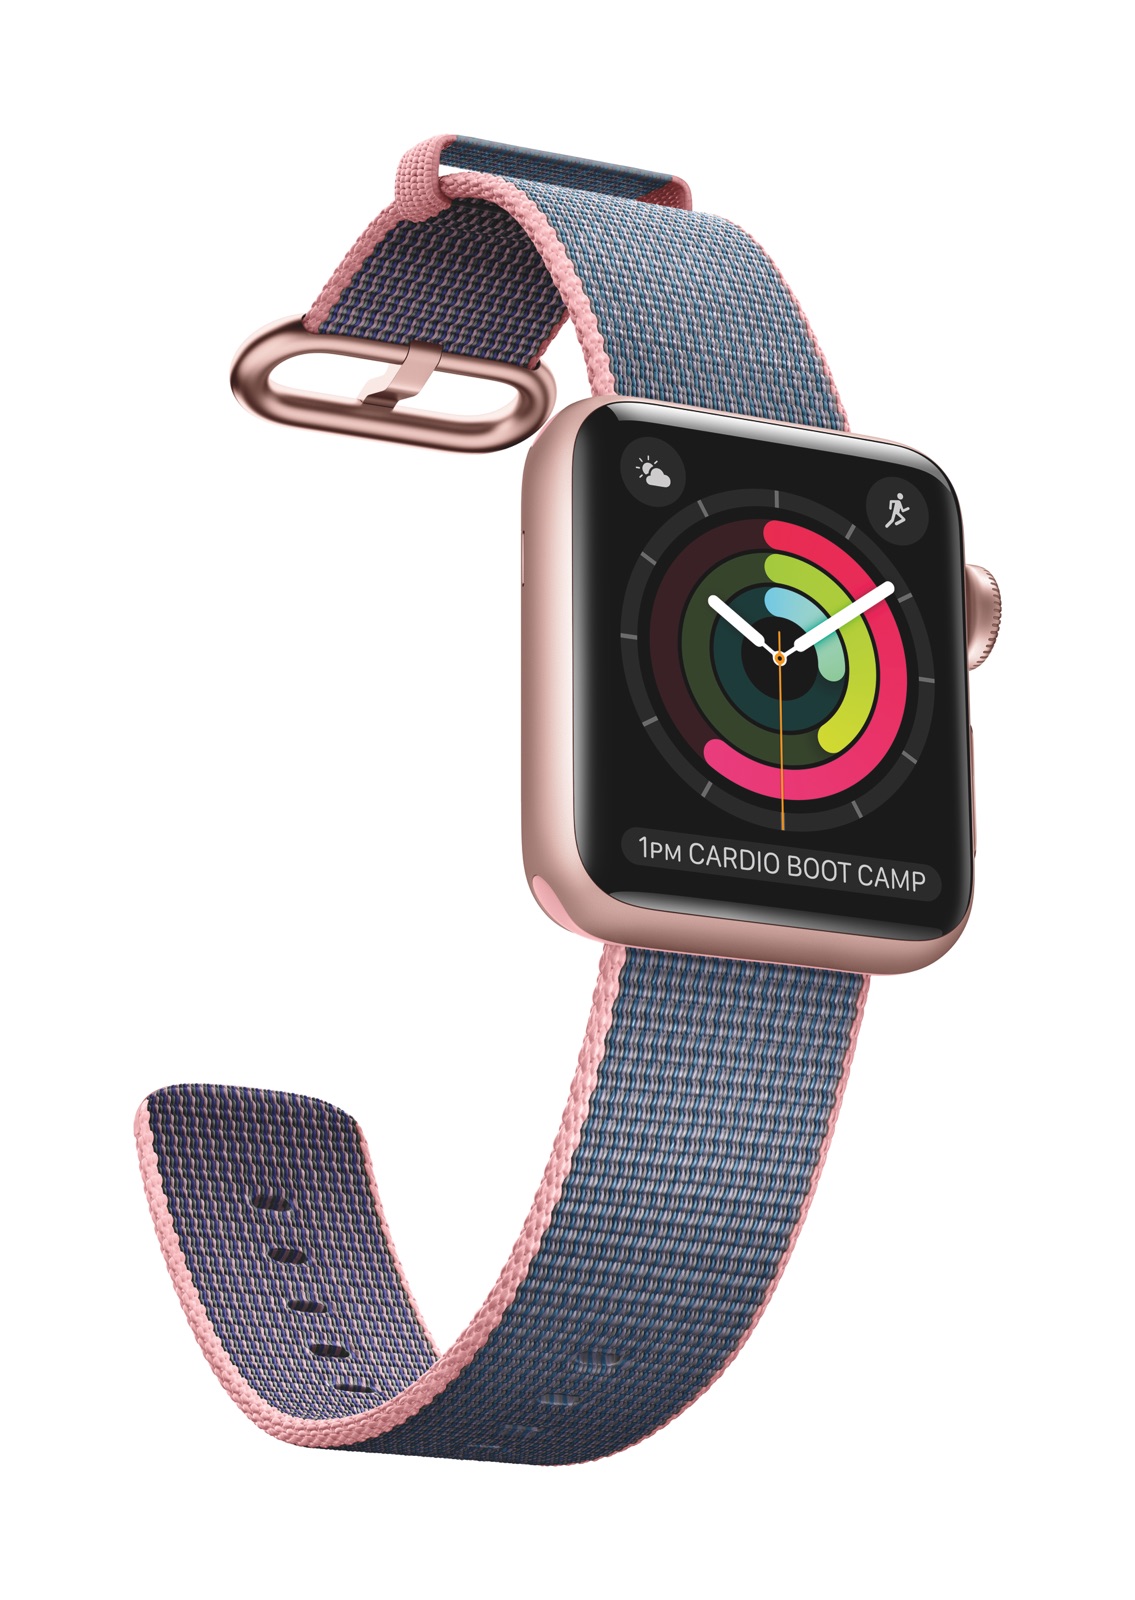 Apple Watch Series 2: Cada vez más independiente